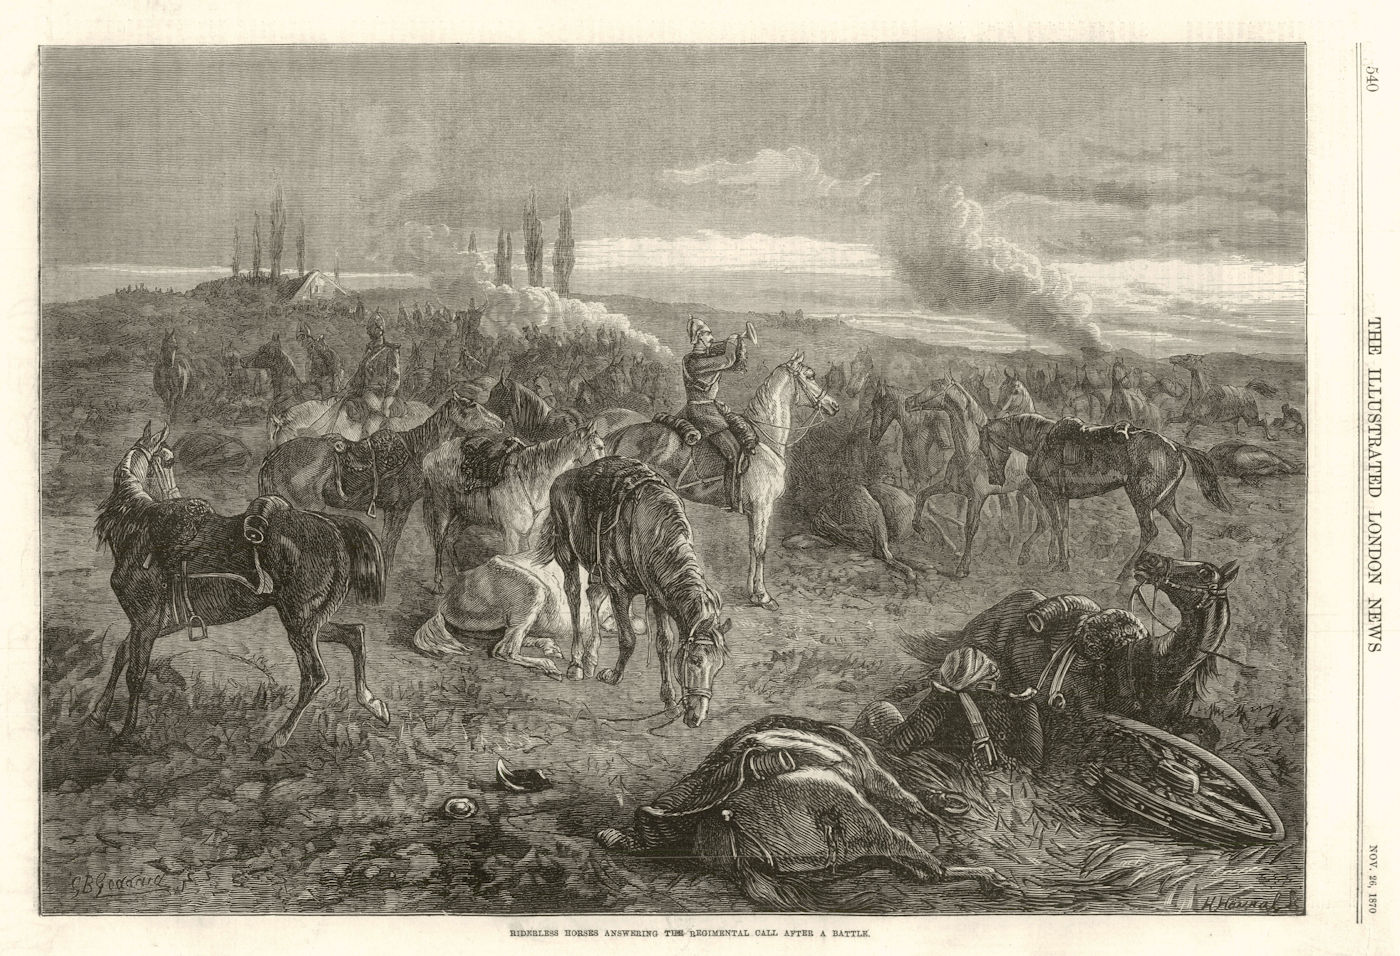 Riderless horses answer Regimental call after battle. Franco-Prussian War 1870